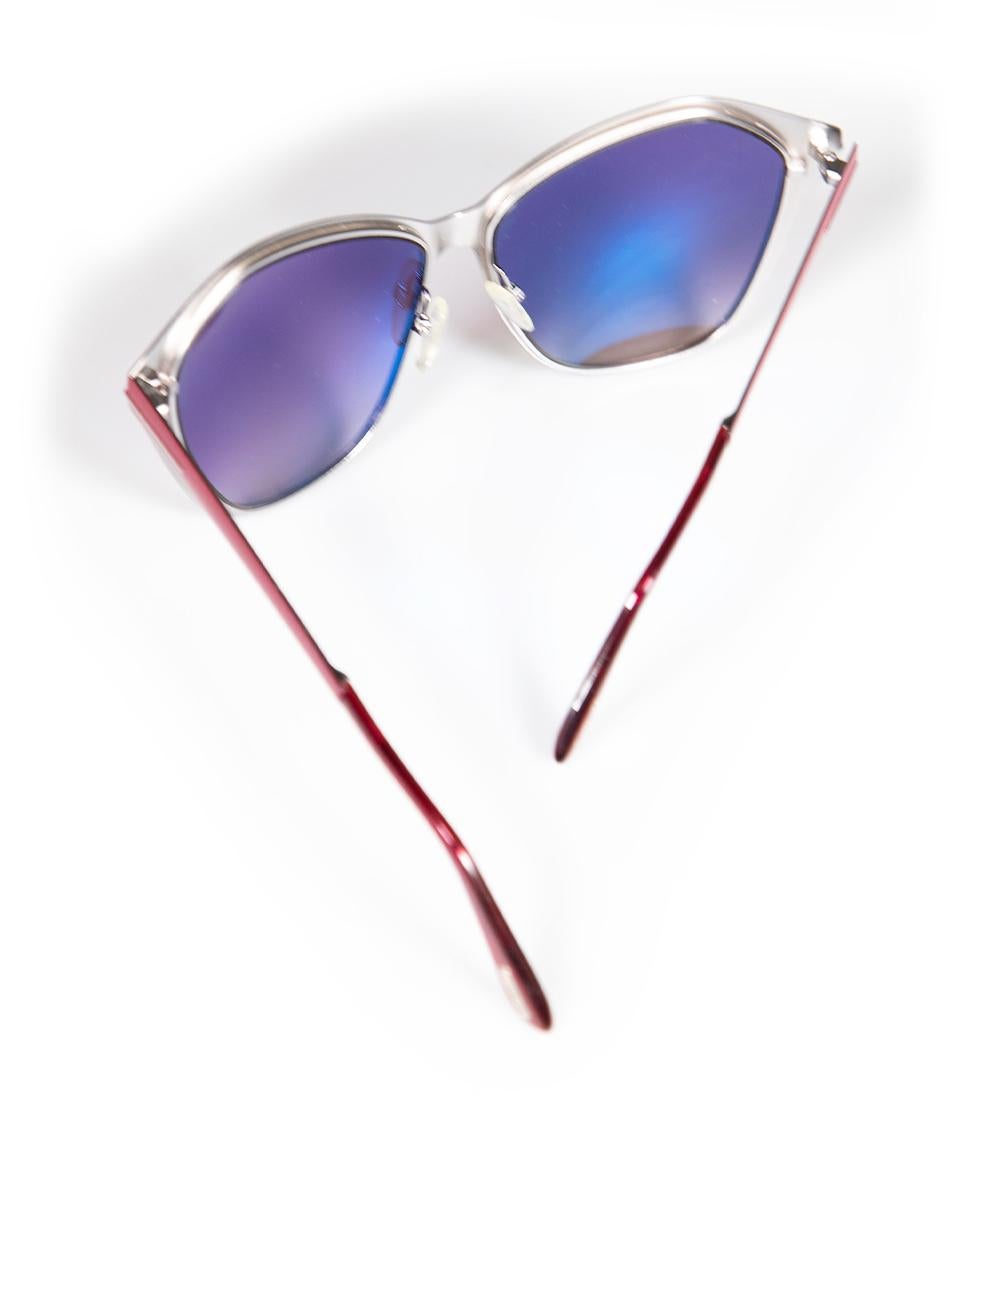 Tom Ford Lena 58 mm Shiny Bordeaux Sunglasses For Sale 3